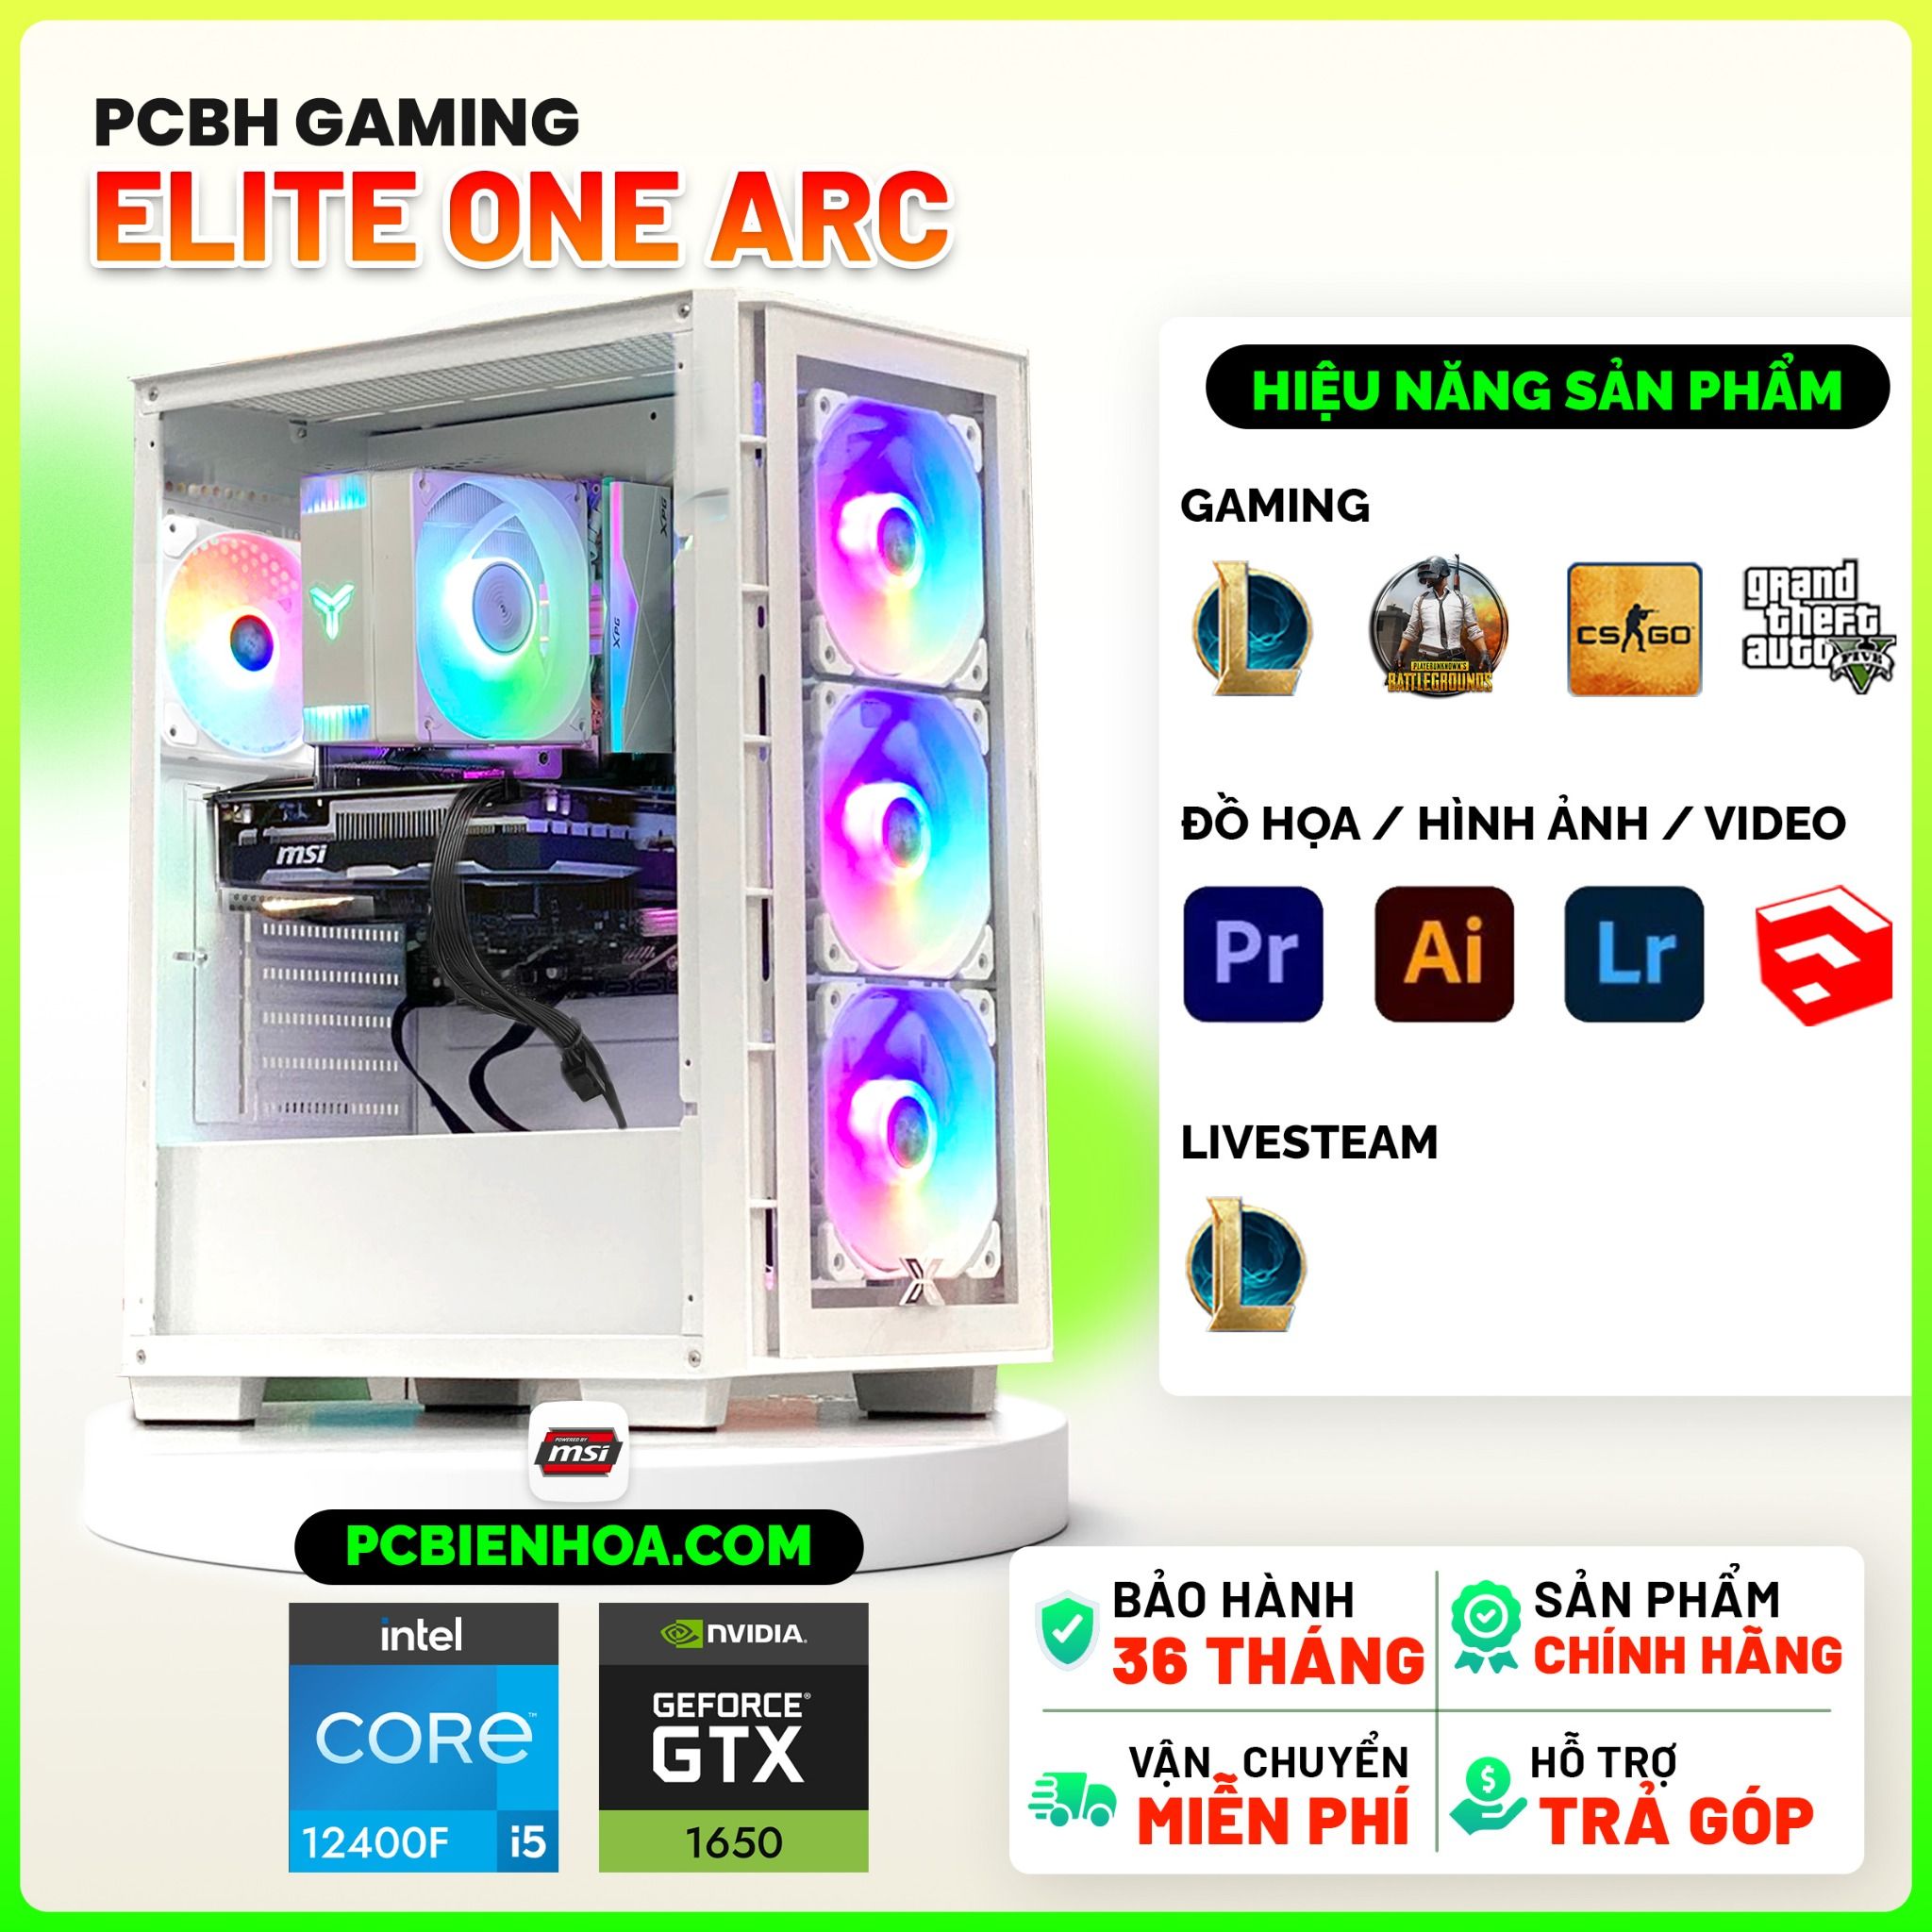  PCBH GAMING ELITE ONE ARC CORE i5 12400F / B760M / GTX1650 4GB / 8GB / 256GB 